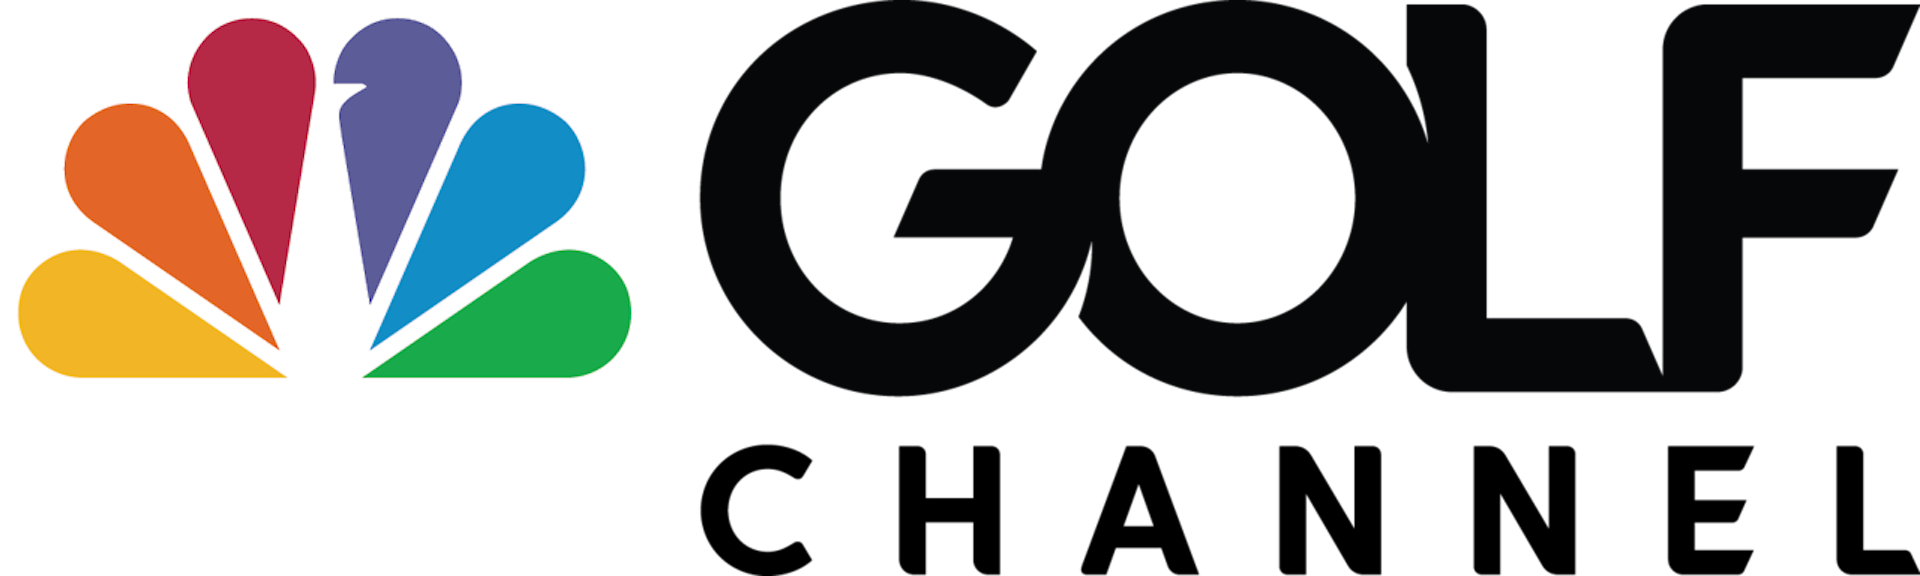 Golf Channel 2014 Logo - Golf Channel Logo Png (1920x576)